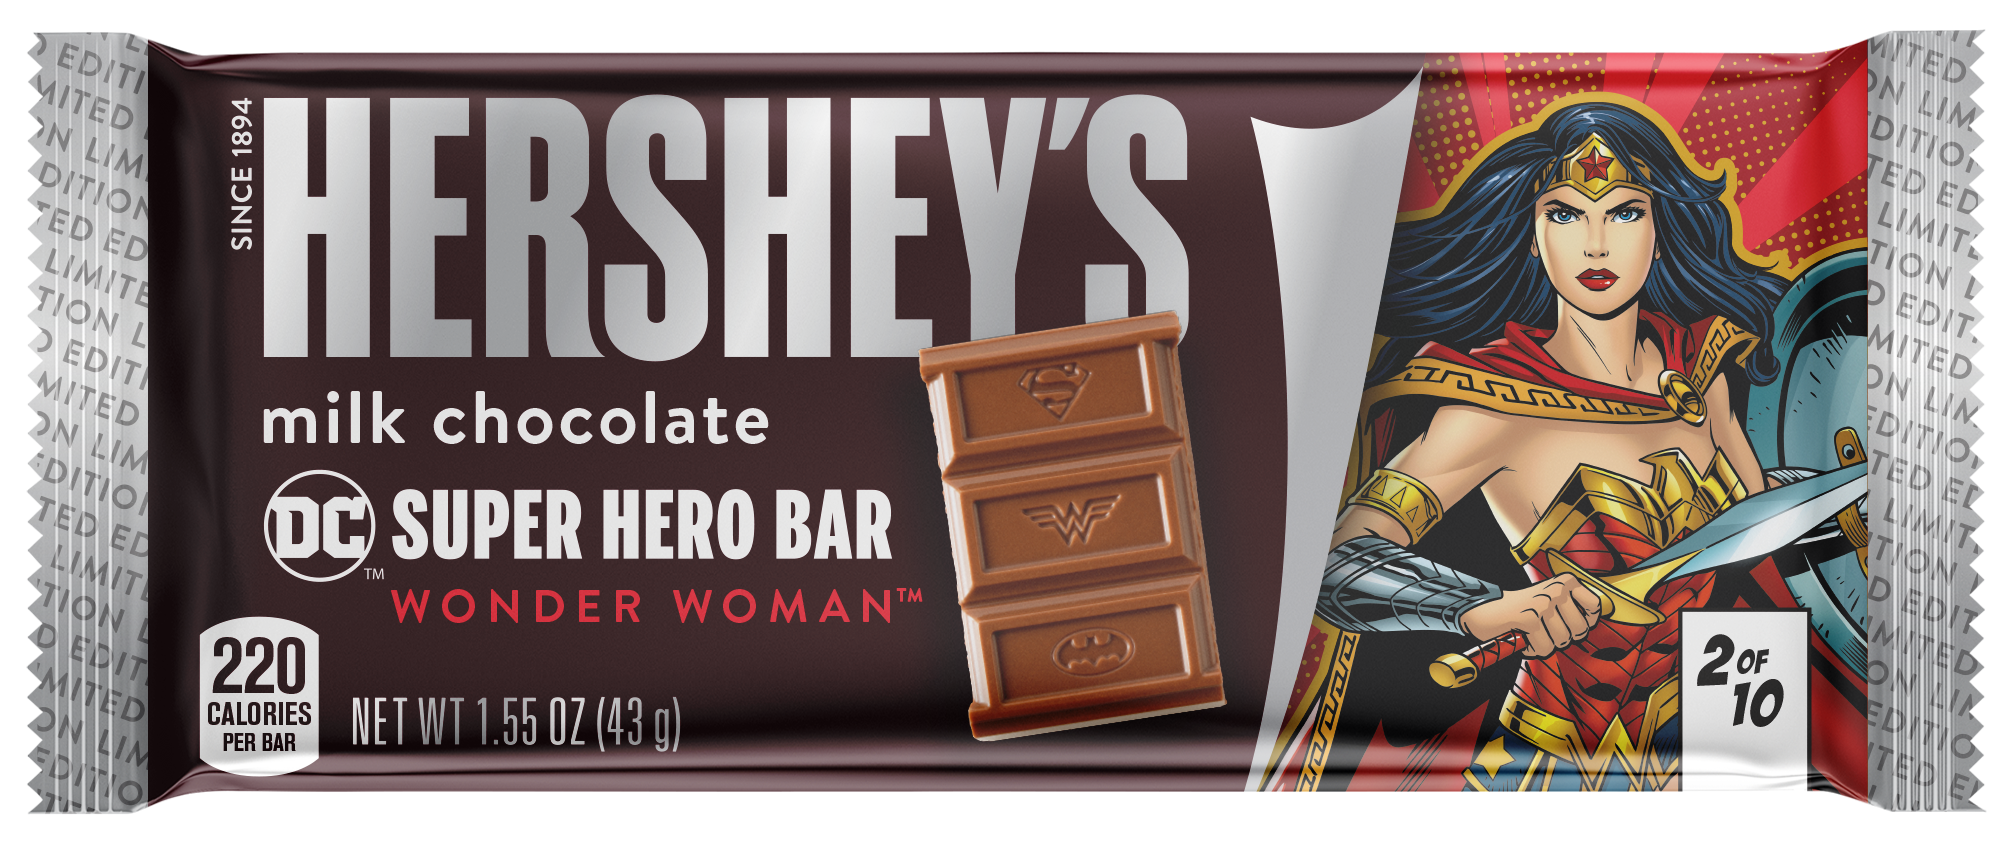 Hershey Wonder woman milk chocolate bar